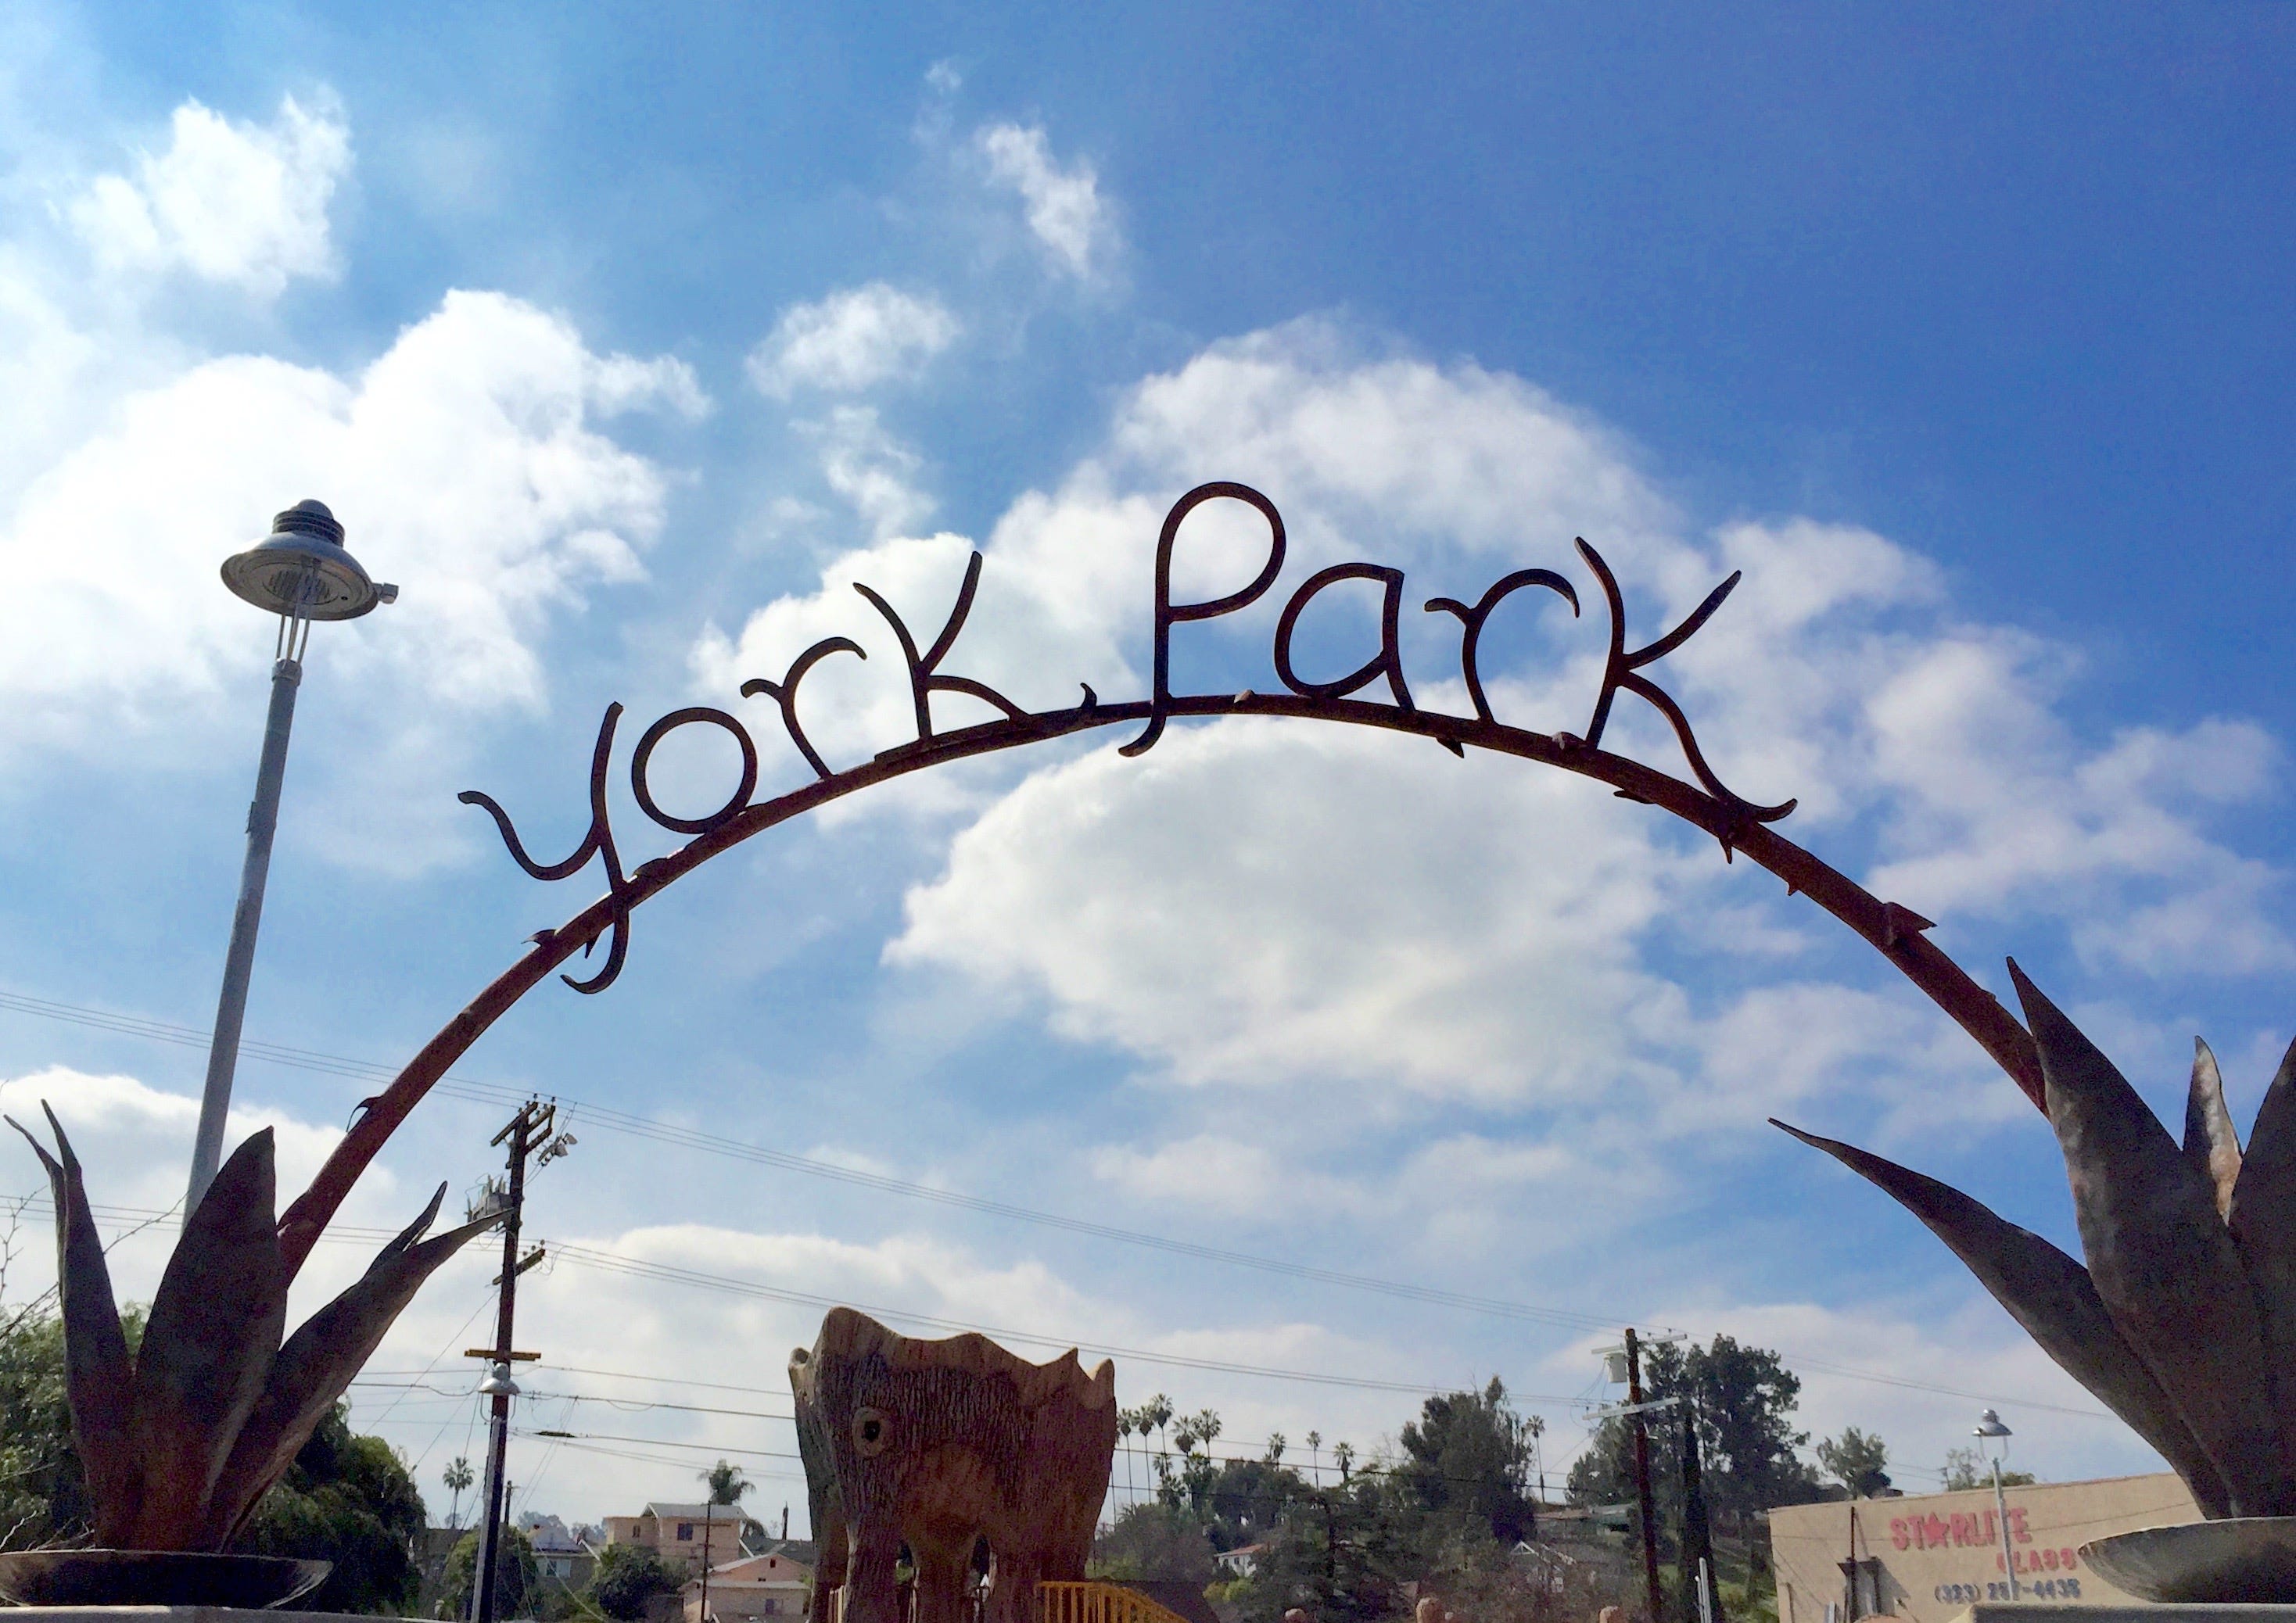 York Park - Los Angeles, CA